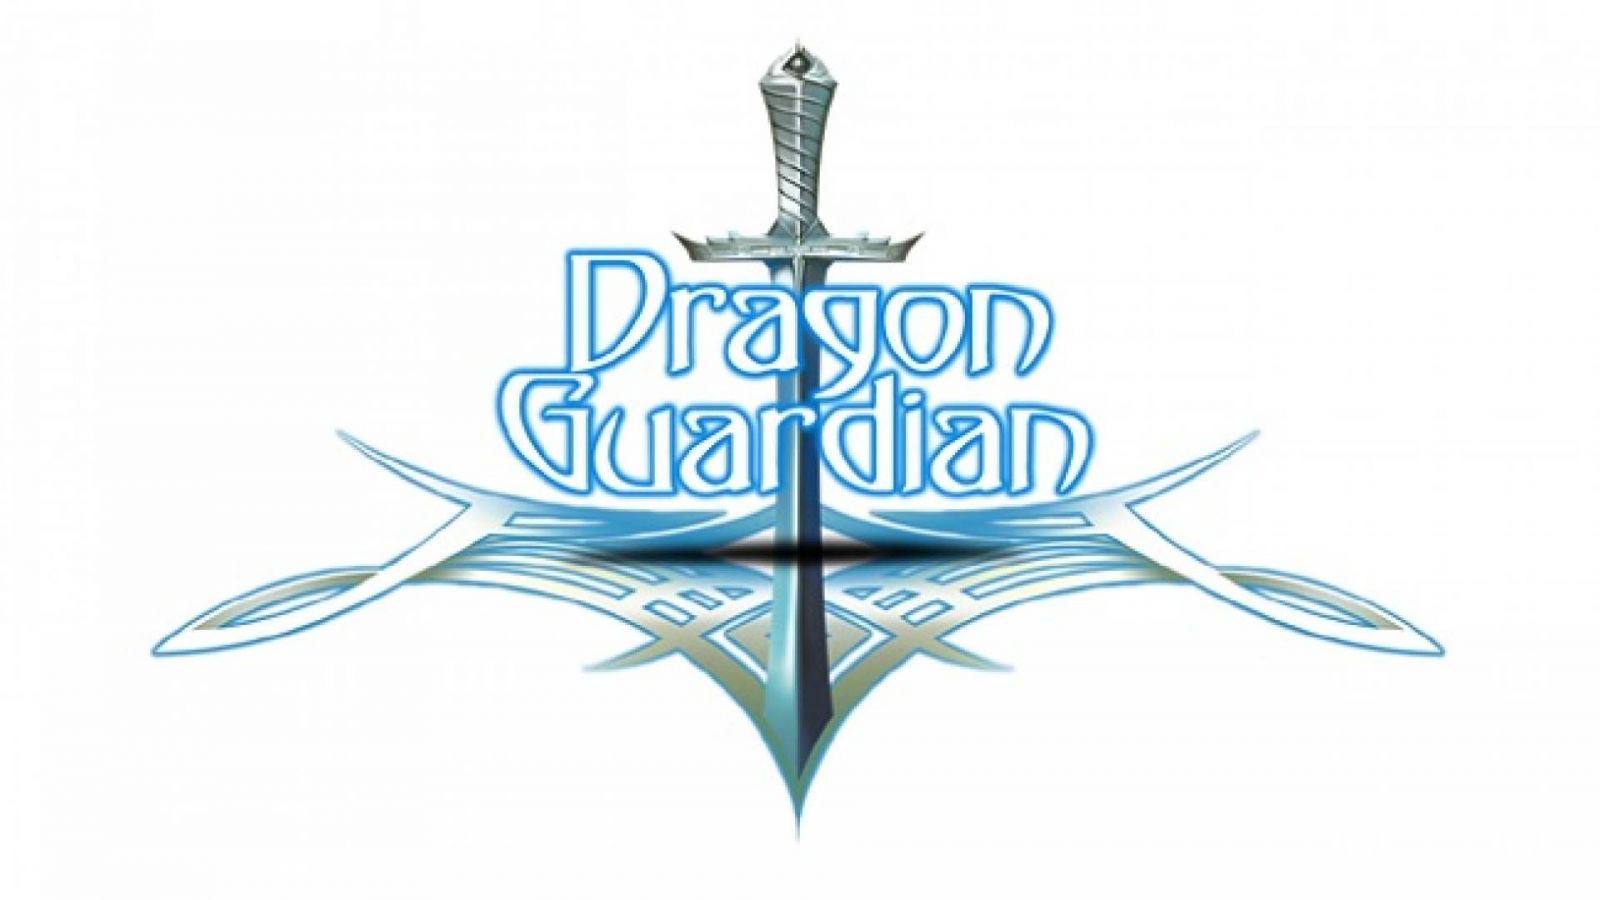 Dragon Guardian - THE BEST OF DRAGON GUARDIAN SAGA © Dragon Guardian